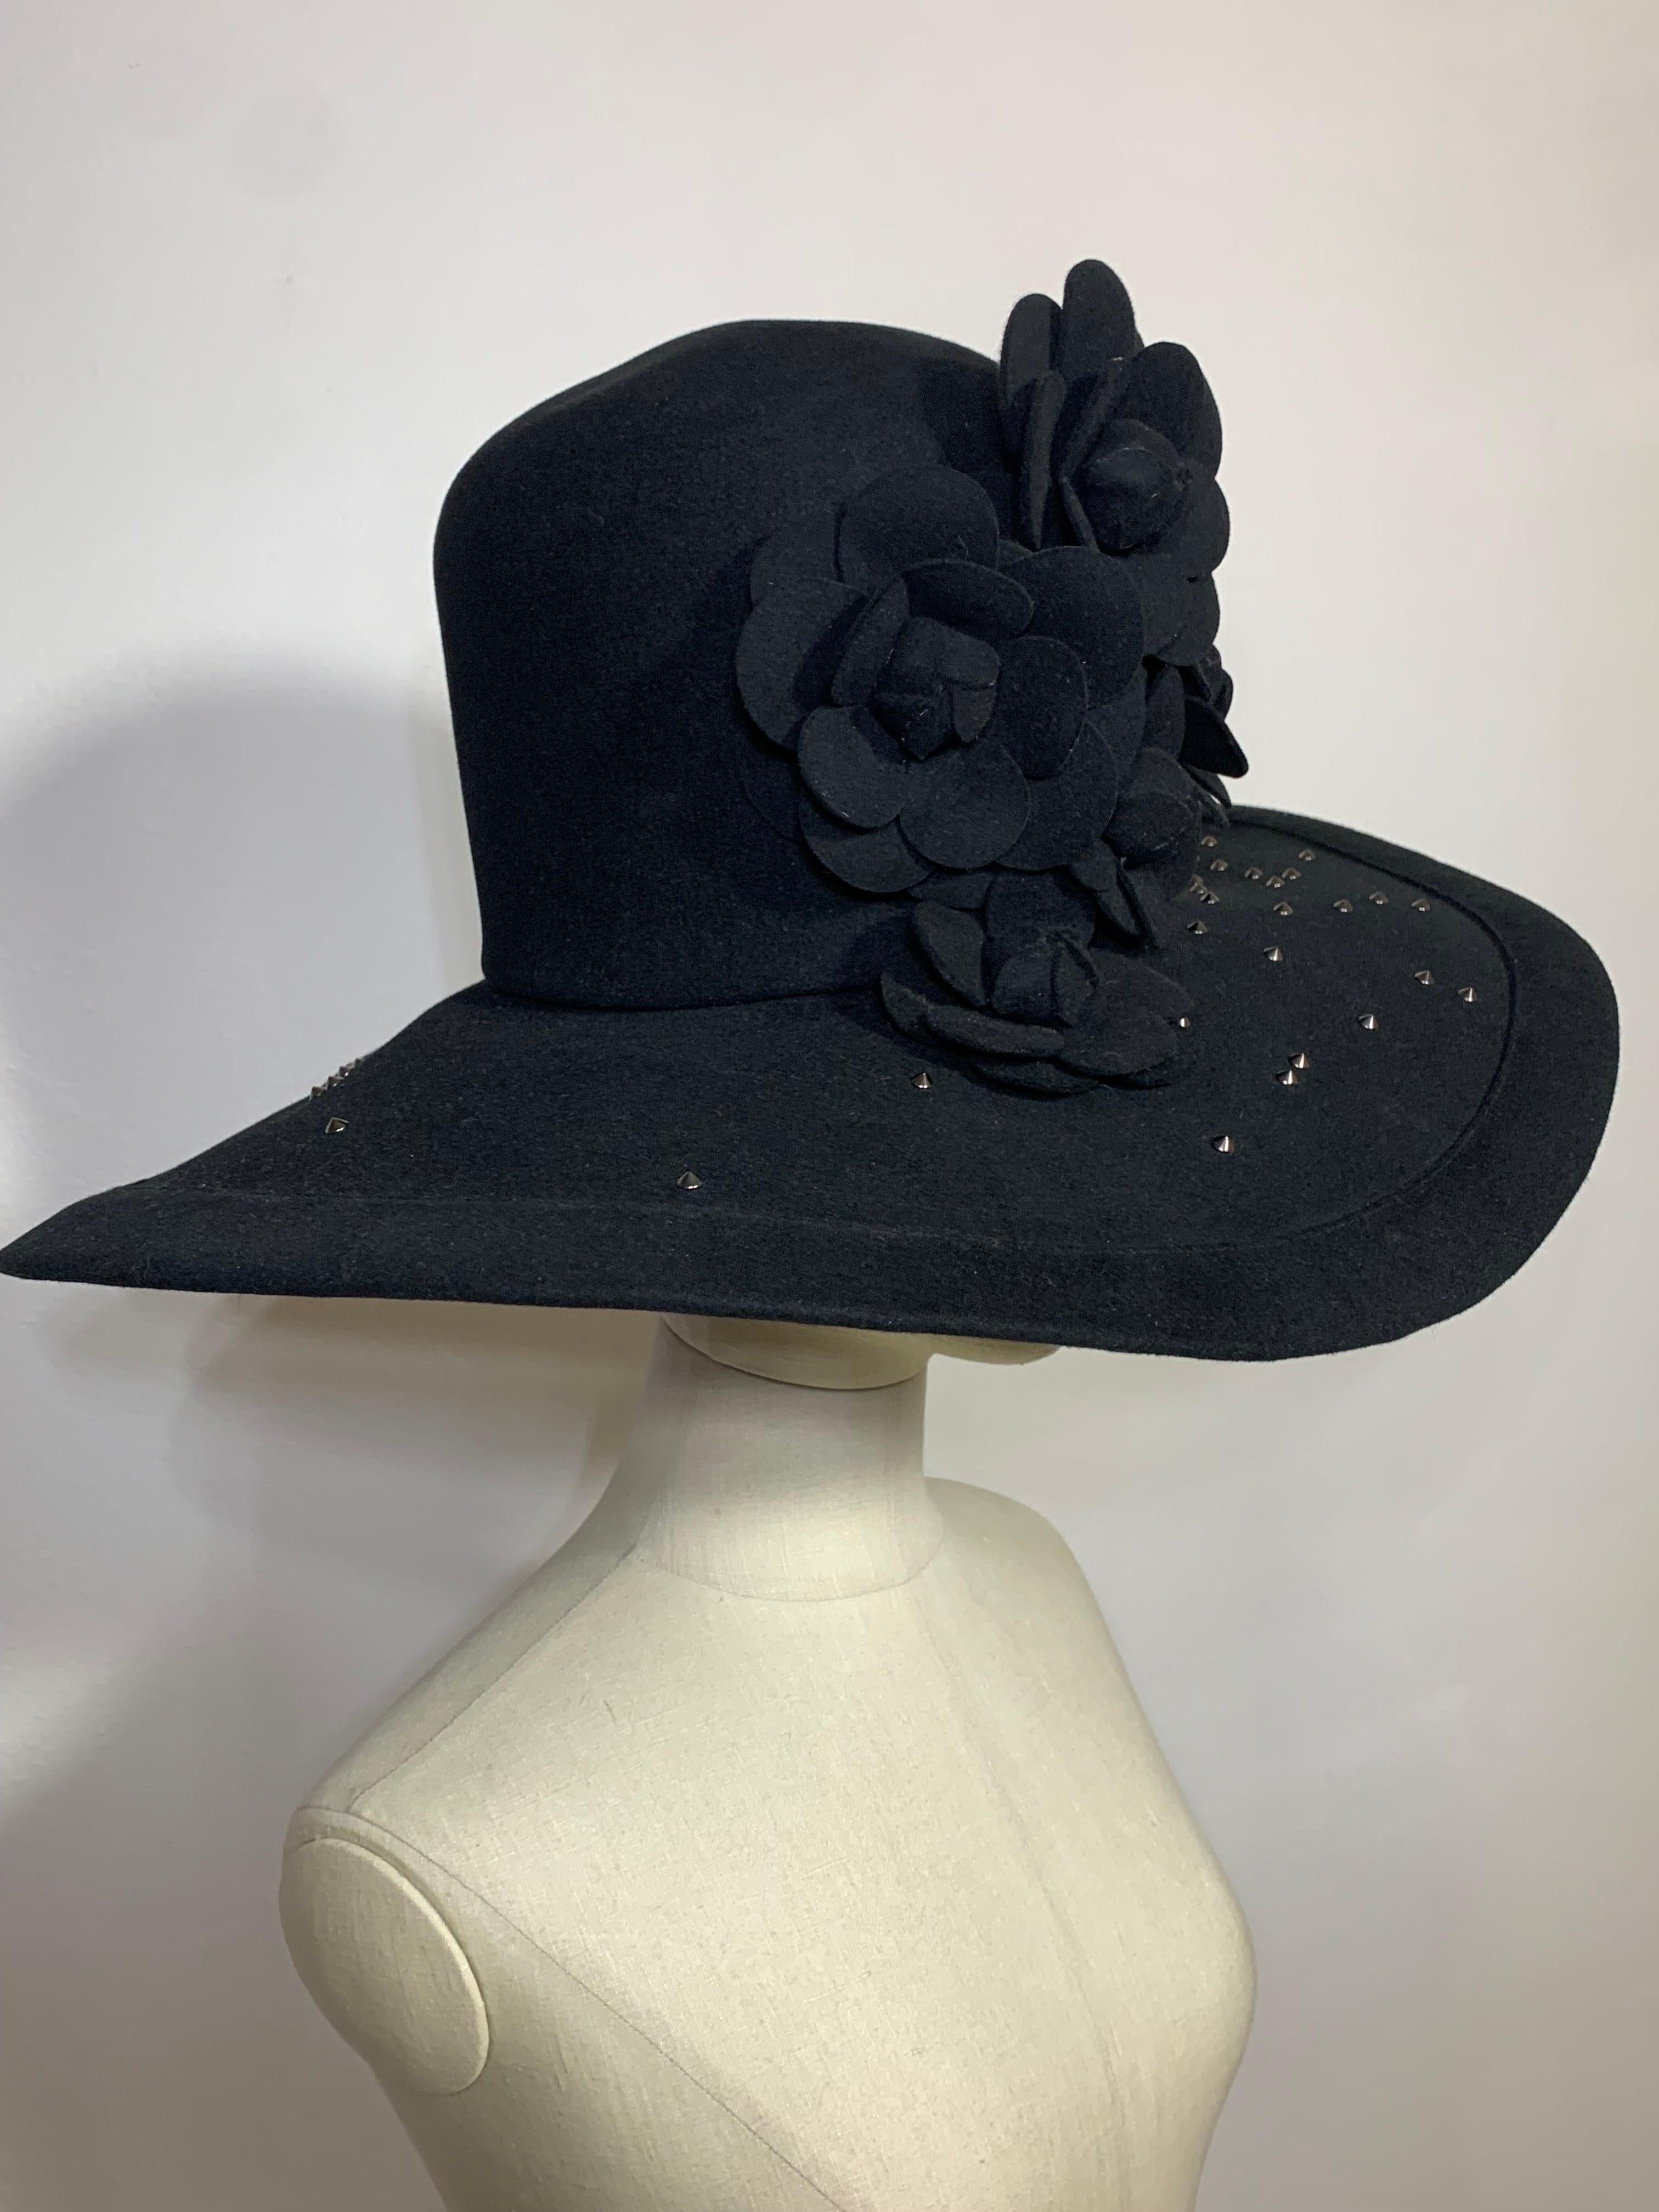 Maison Michel Black Large Brimmed Felt High Crown Hat w Studs & Camellia Flowers For Sale 2